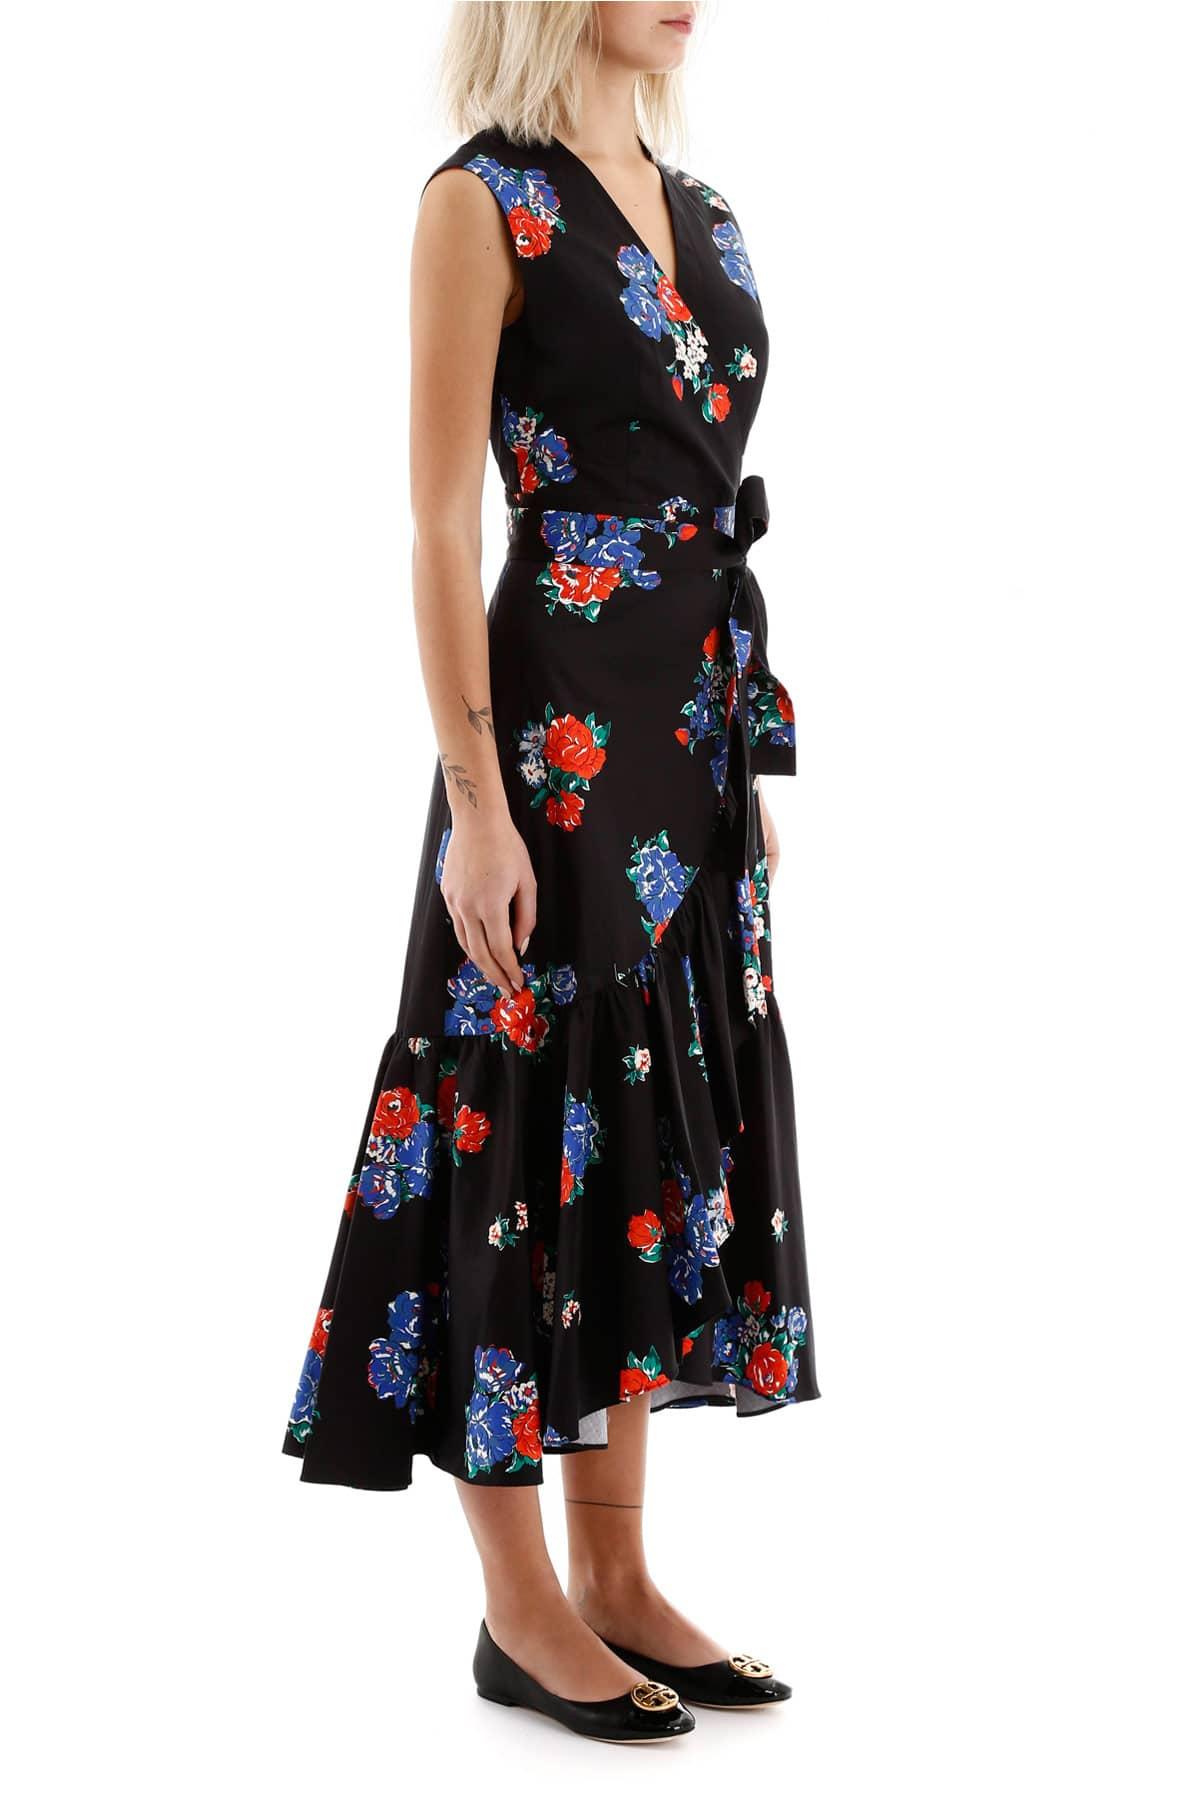 Tory Burch Cotton Flower Print Wrap Dress in Black,Blue,Red (Black) - Lyst